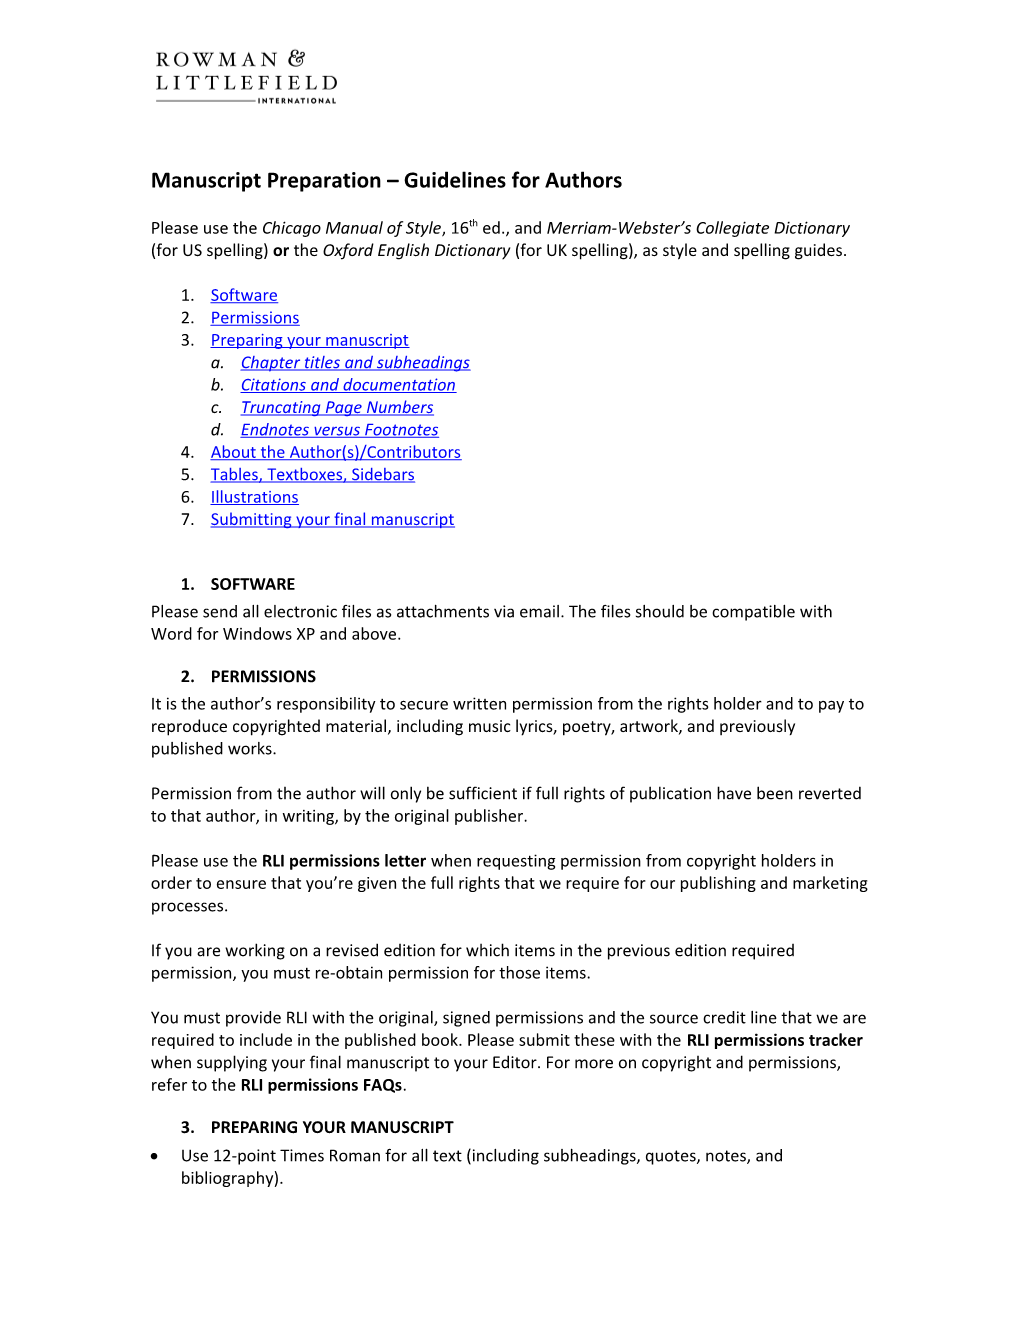 RLI Manuscript Preparation Guidelines